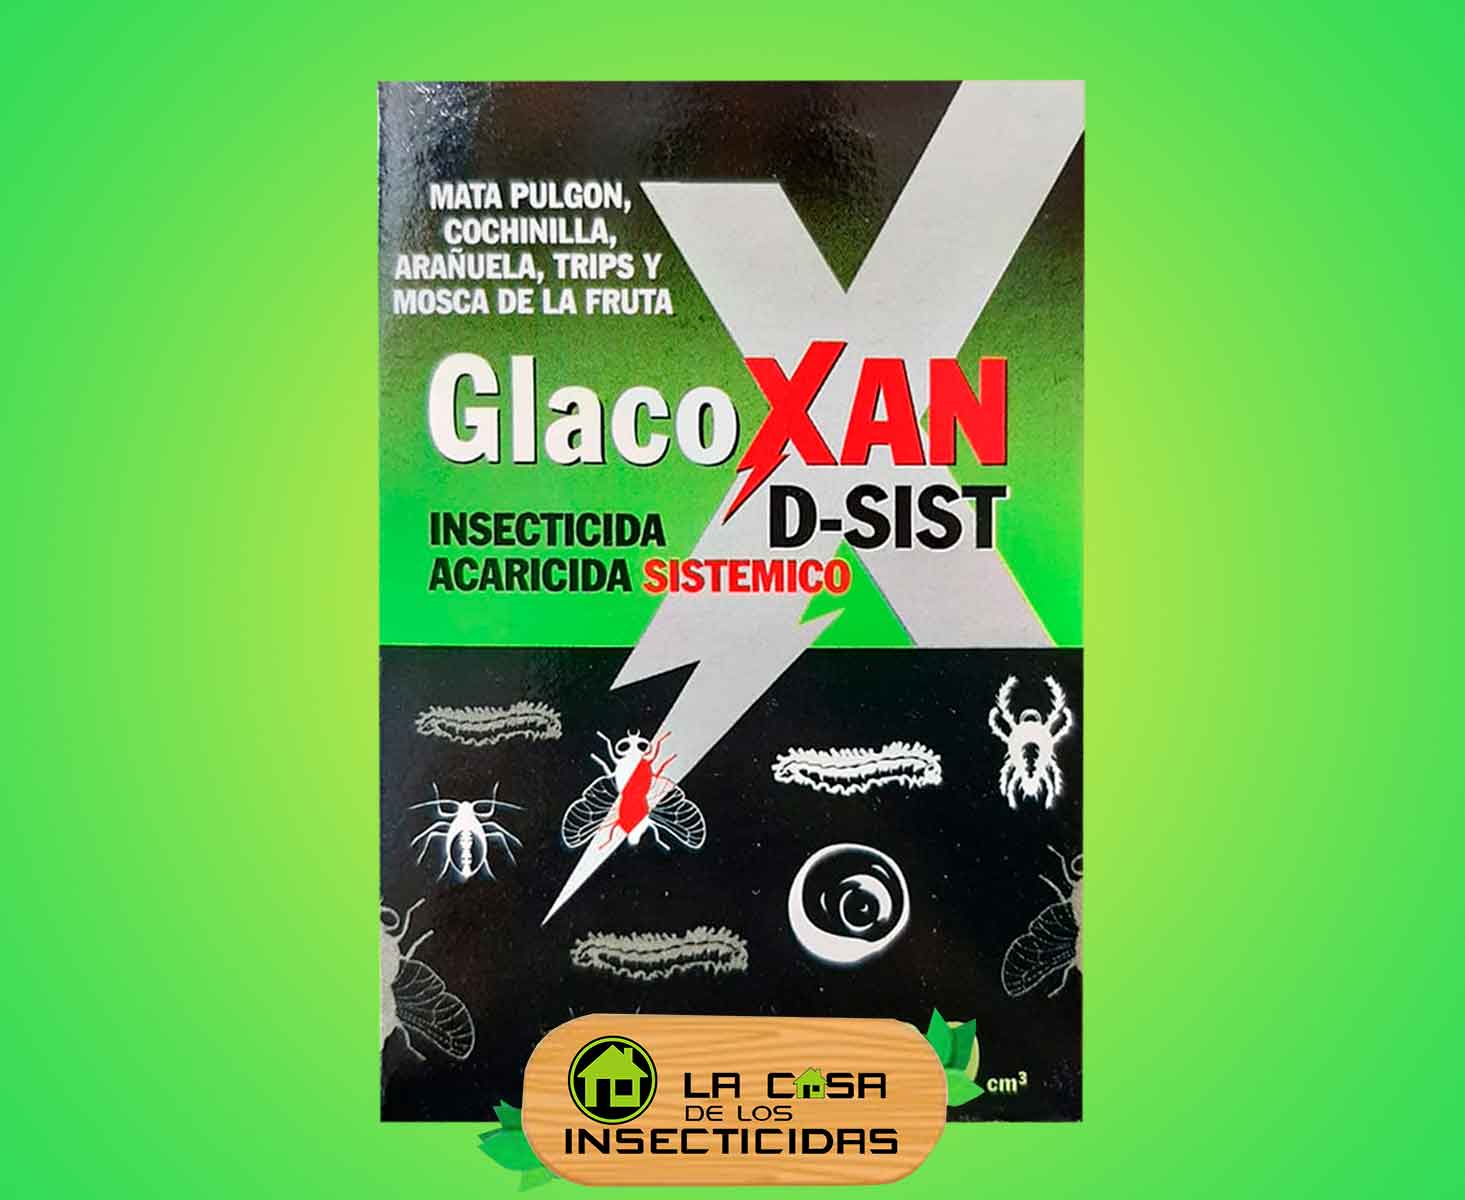 Glacoxan D-Sist insecticida sistémico